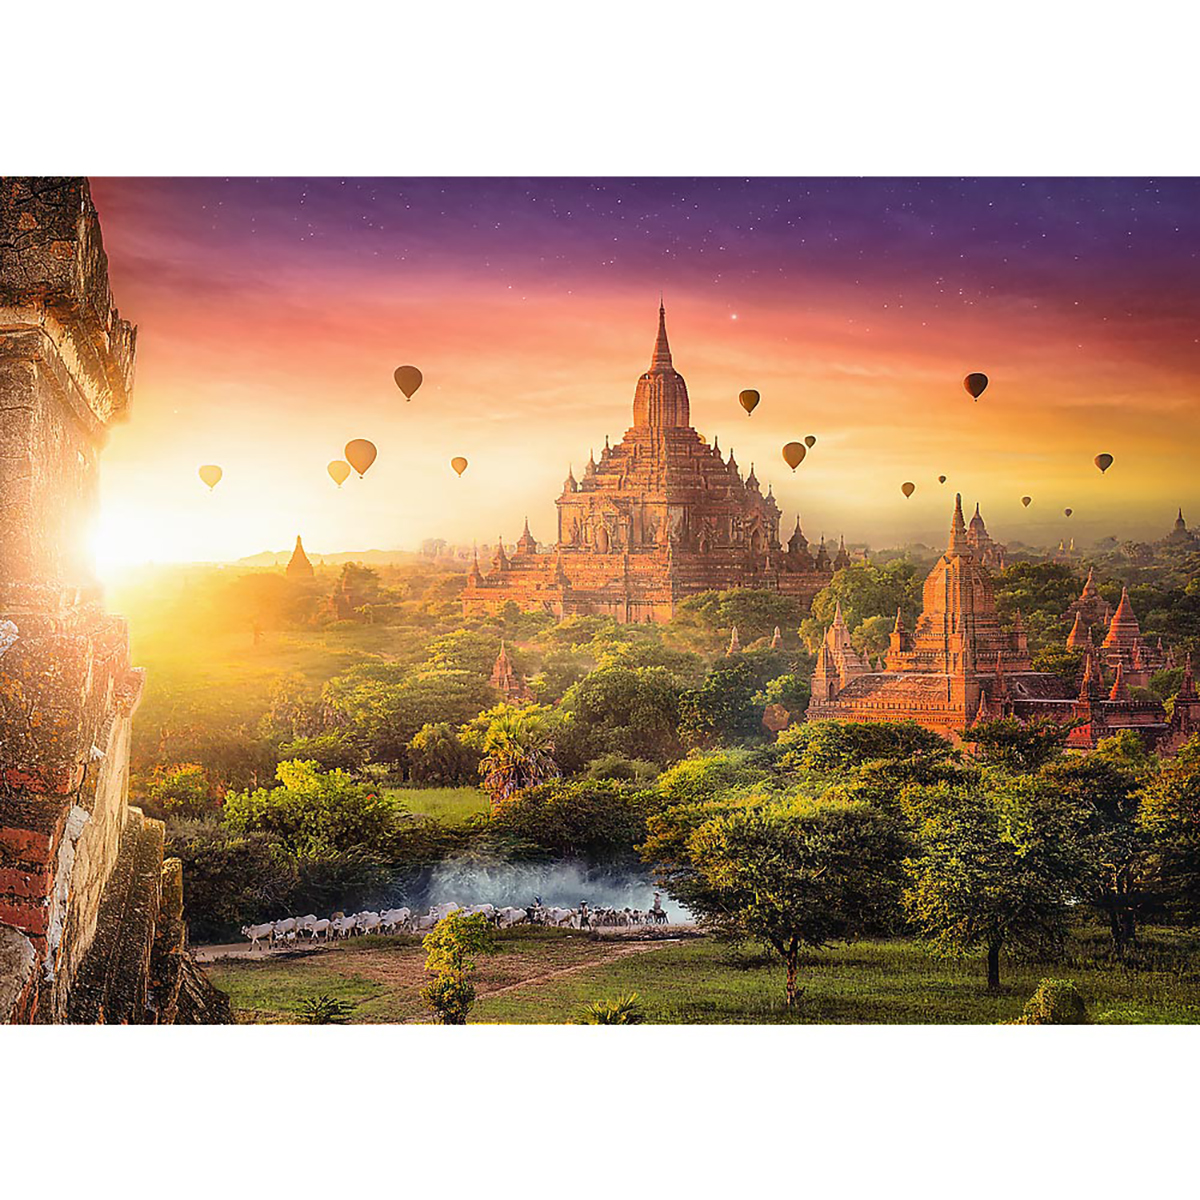 TREFL Alter Tempel, Puzzle Burma